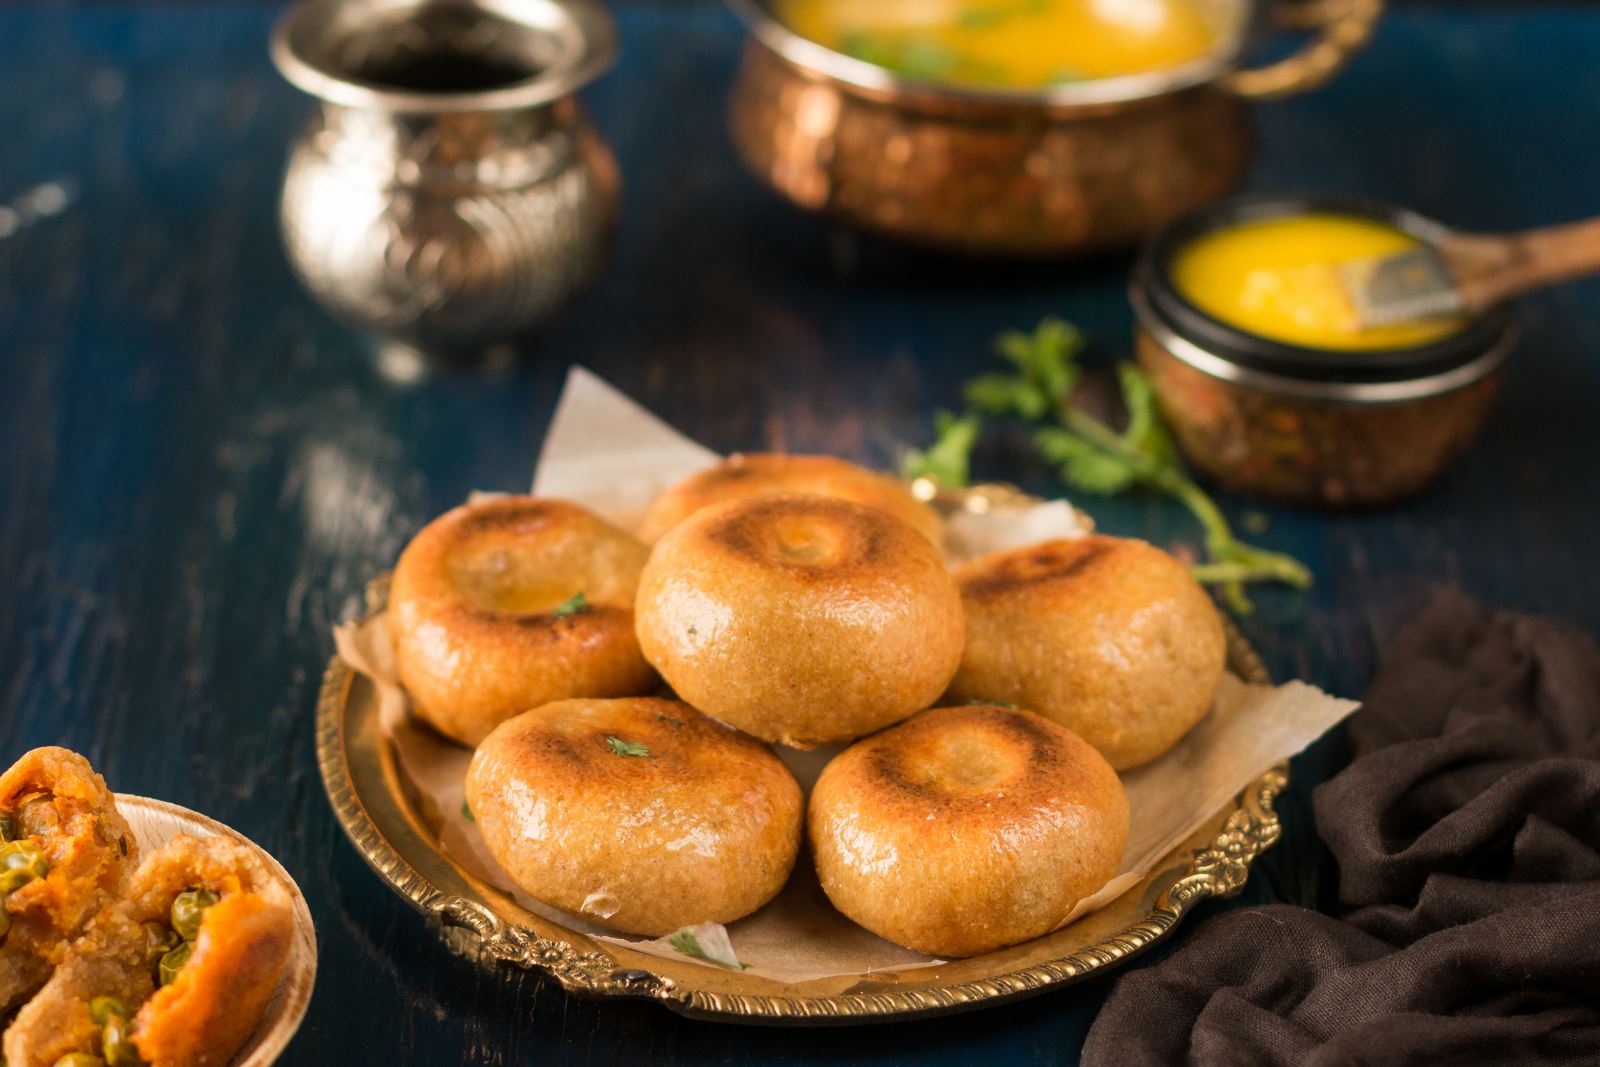 Baked Whole Wheat Masala Baati Recipe (Healthy Rajasthani Spiced Wheat Dumplings)